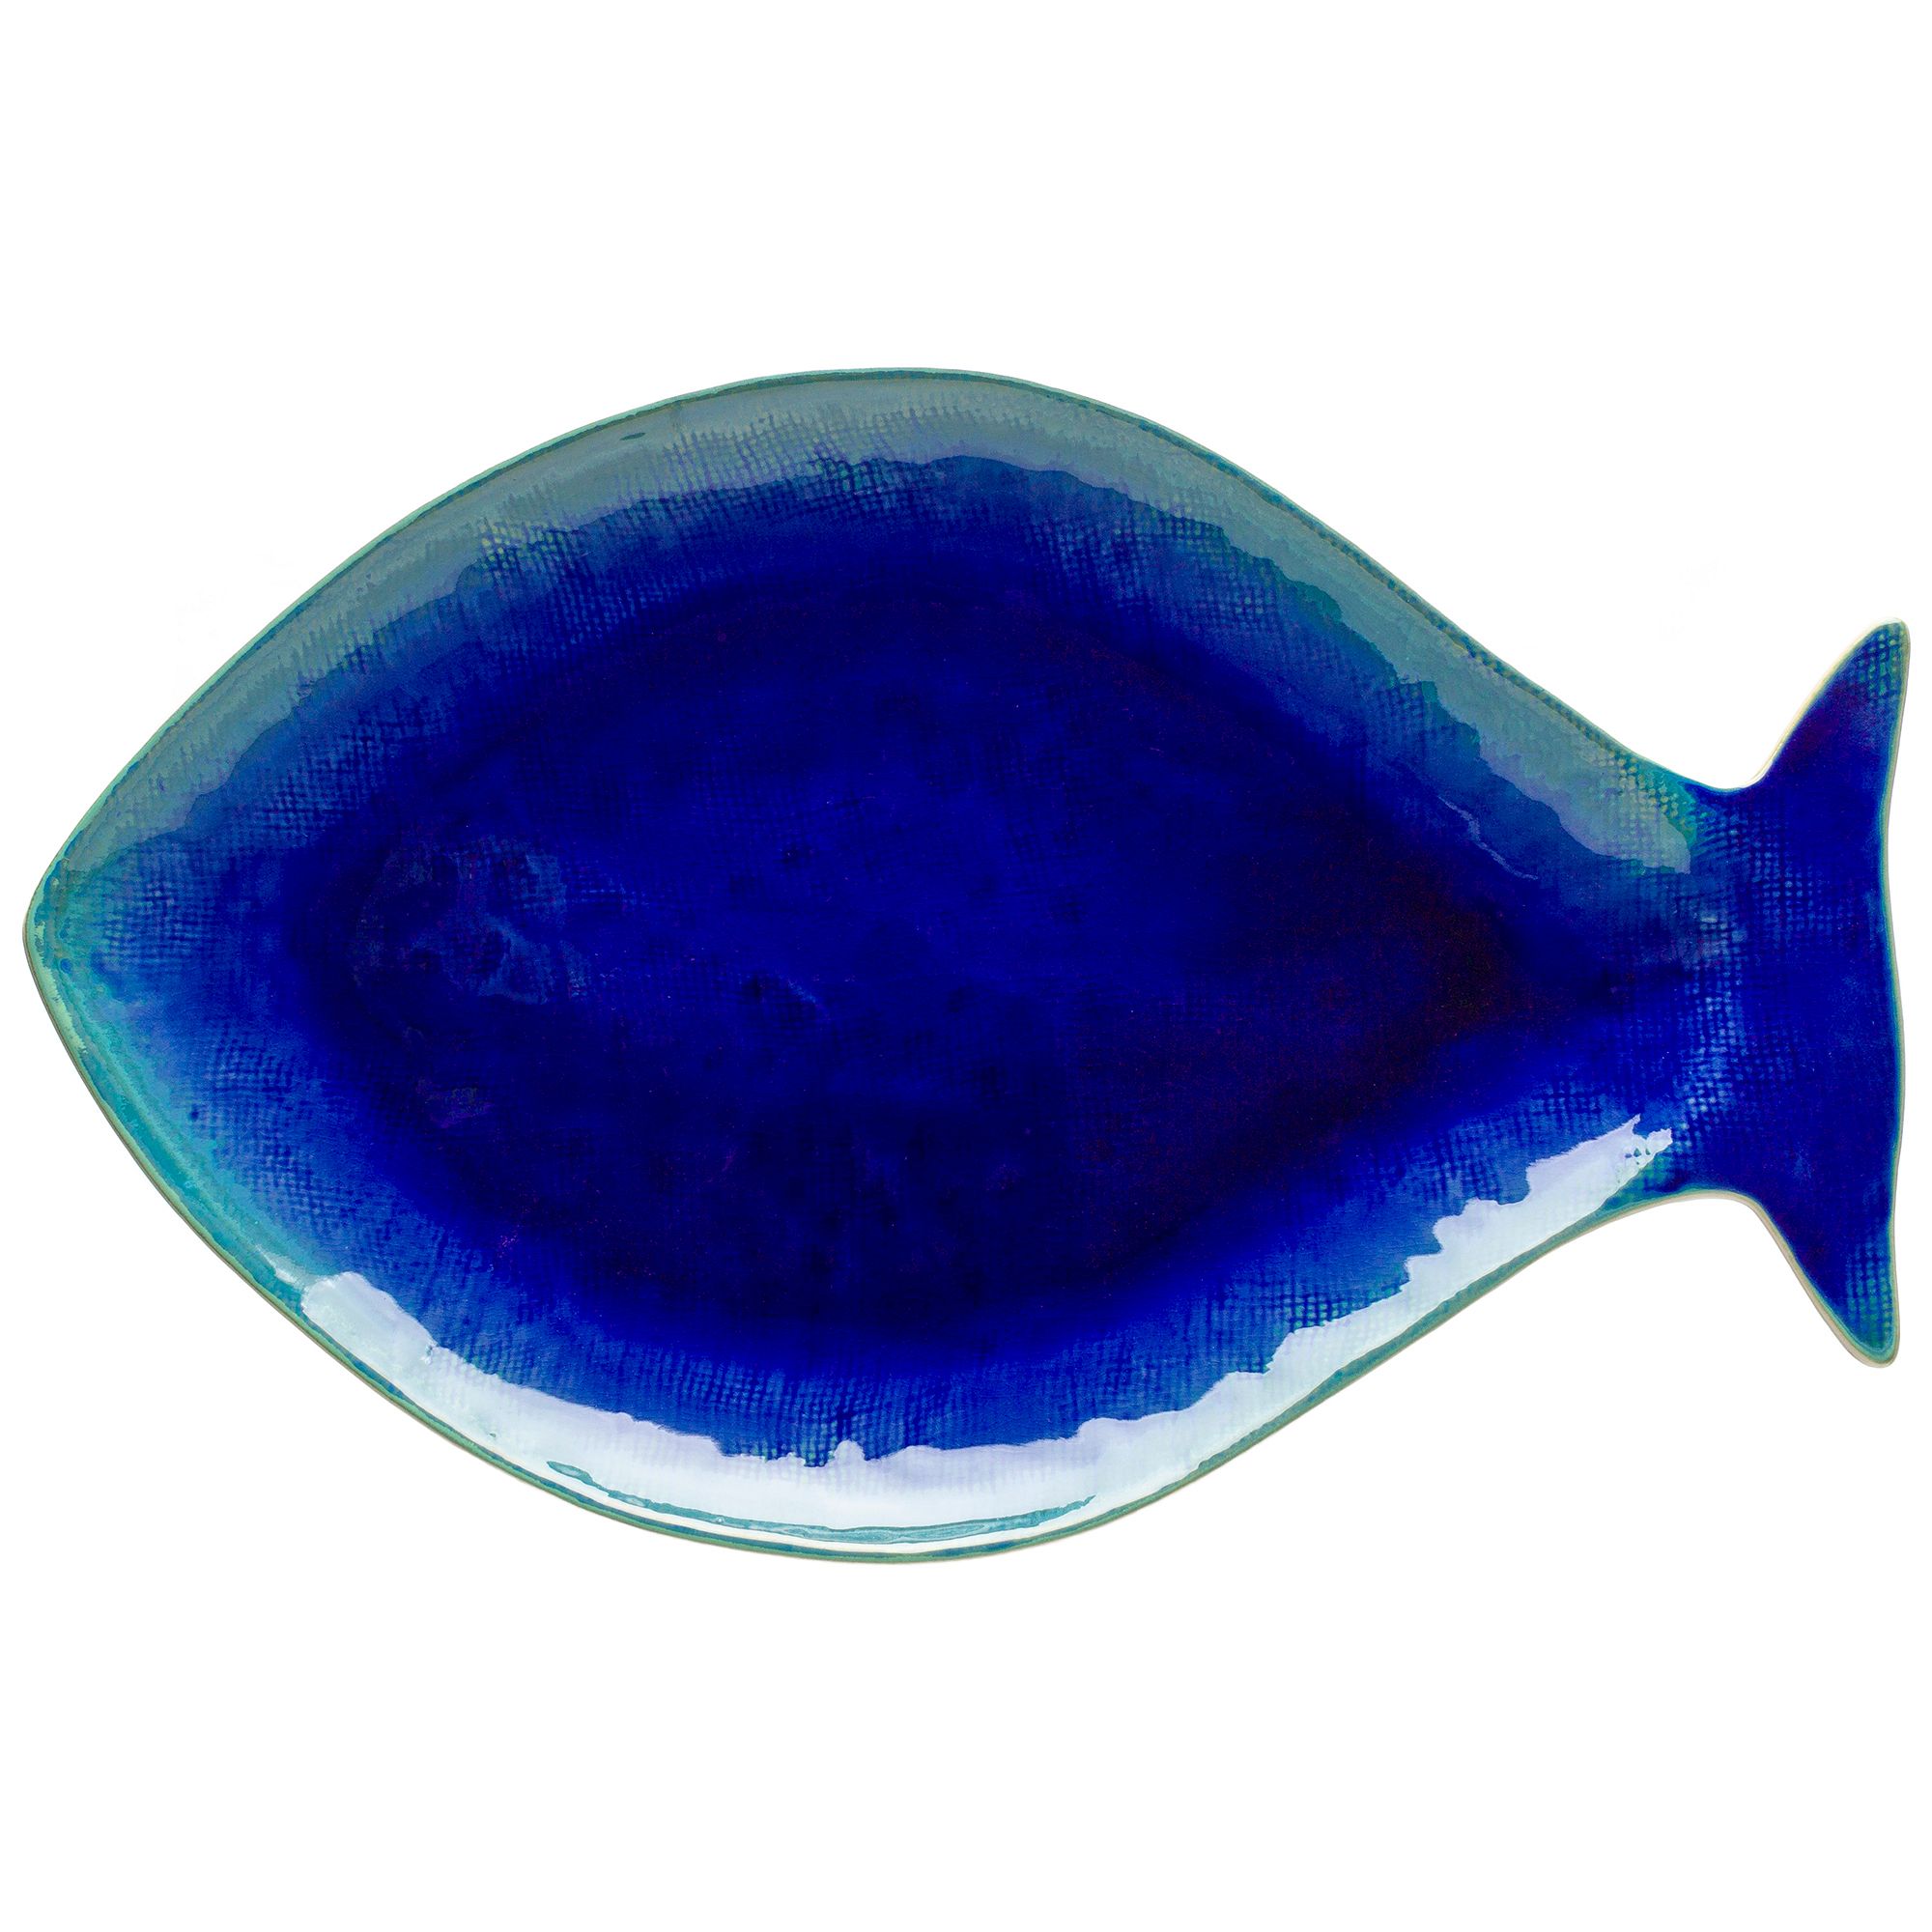 Casafina Dori Fish Stoneware Serveware | West Elm